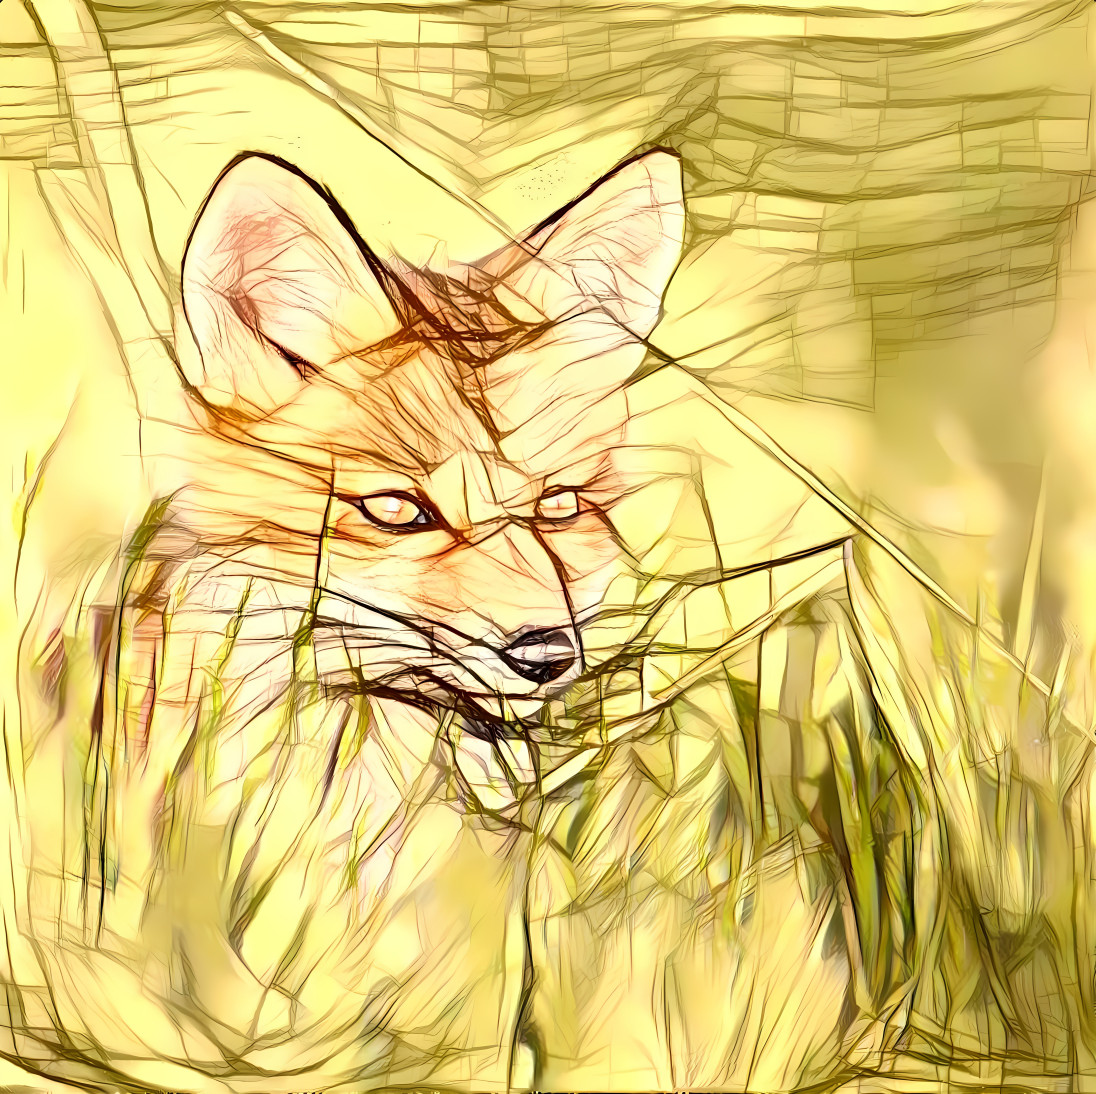 starring fox